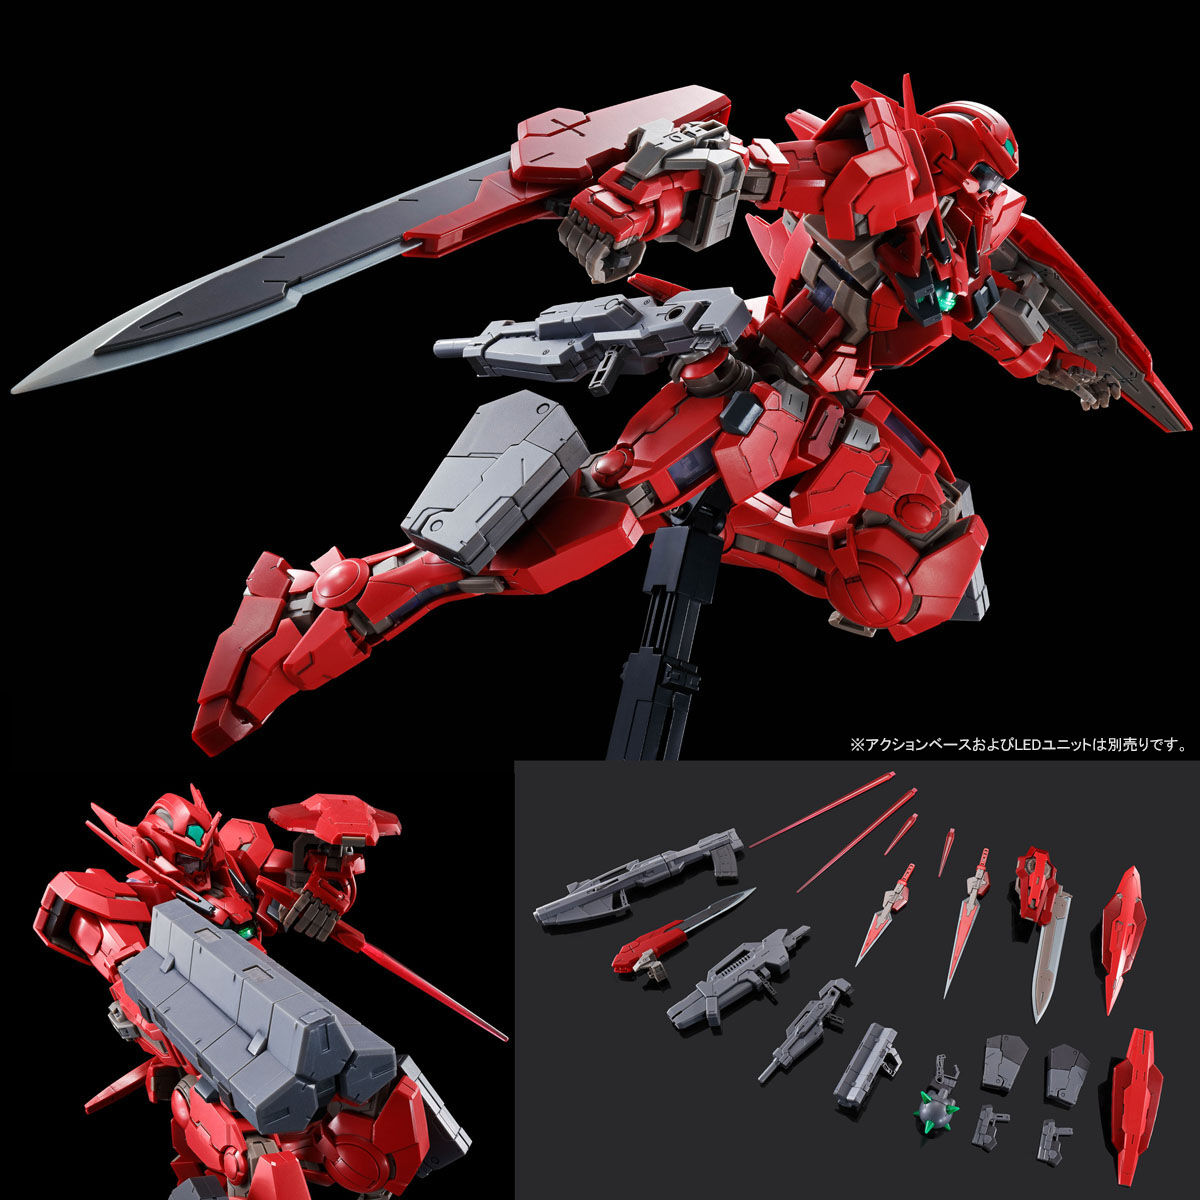 MG 1/100 GNY-001F Gundam Astraea Type-Fereshte(Full Weapon Set)